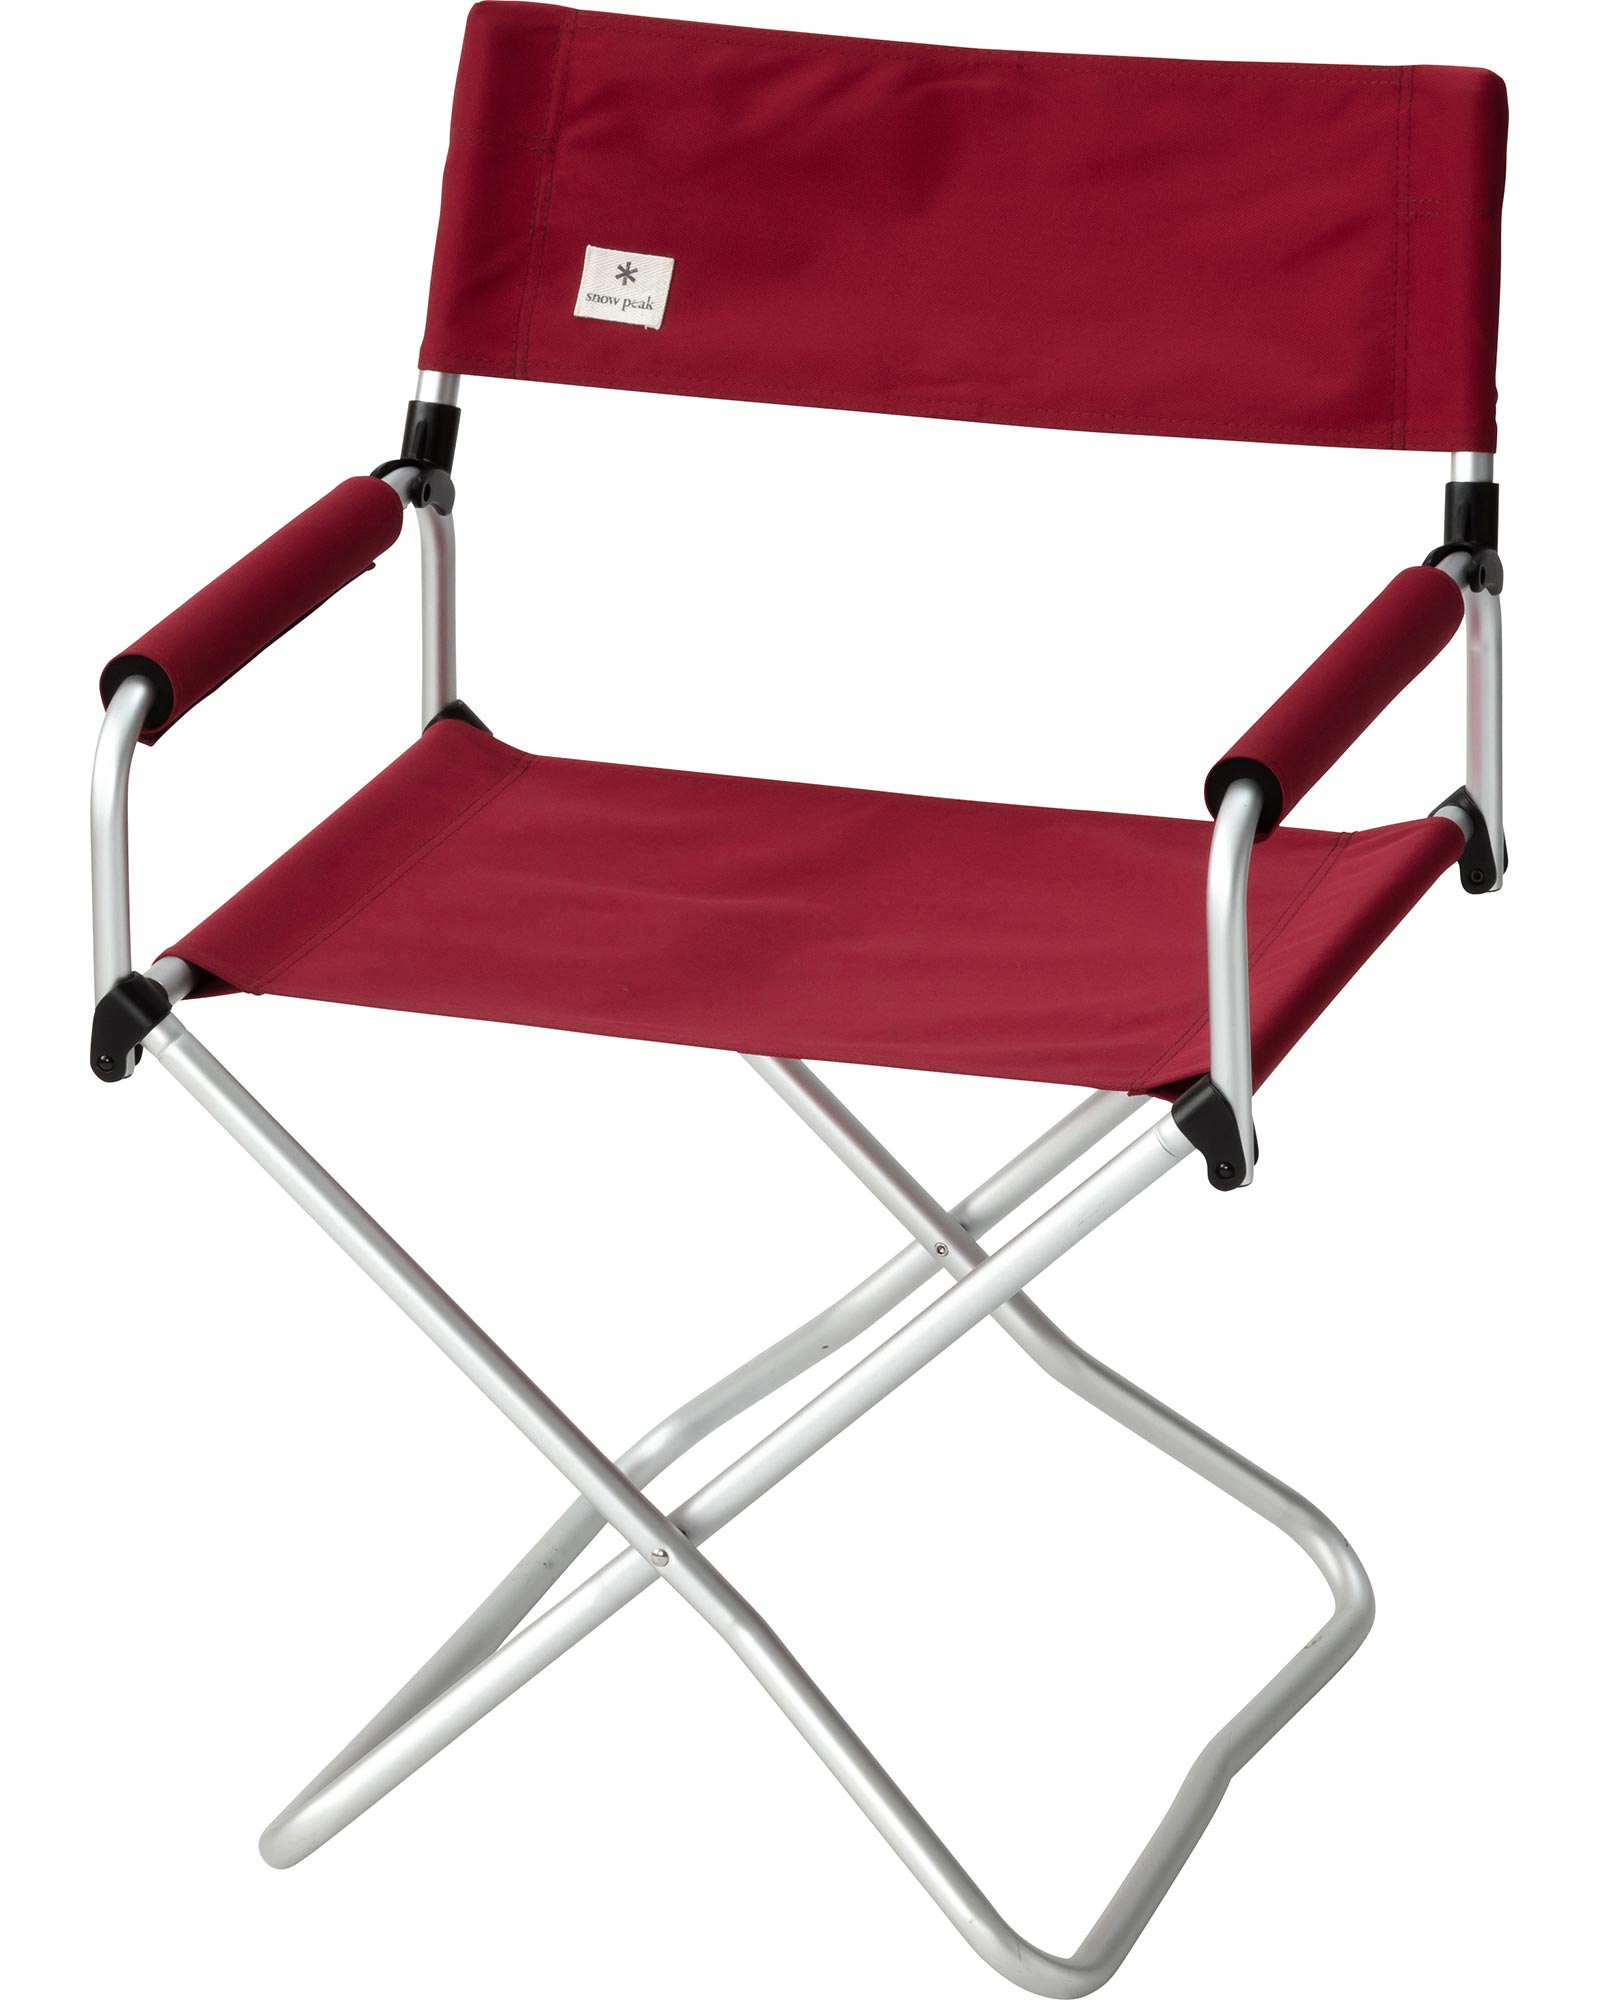 Snow Peak Folding Chair - Red